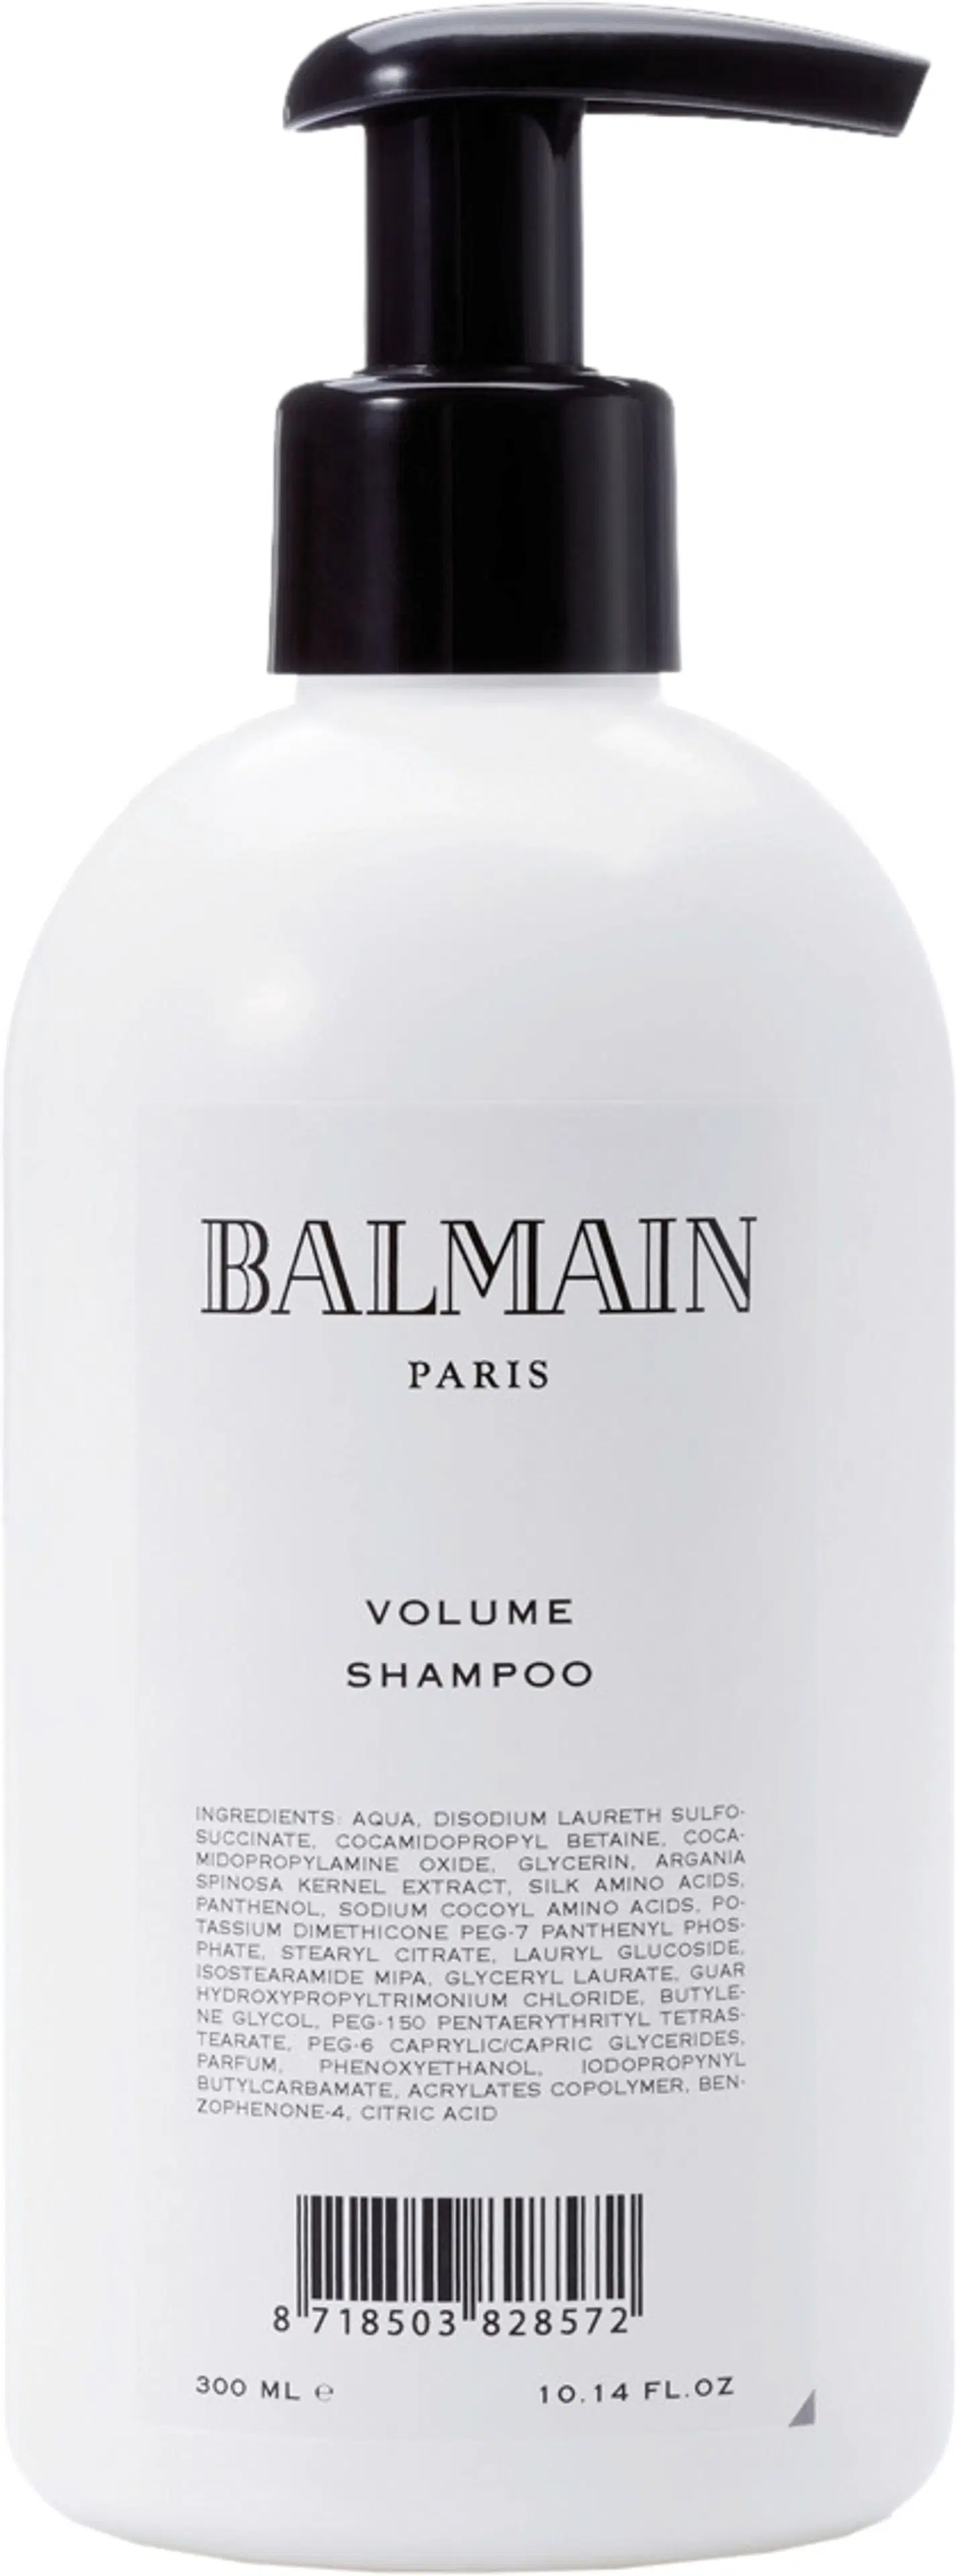 Balmain Volume shampoo 300 ml